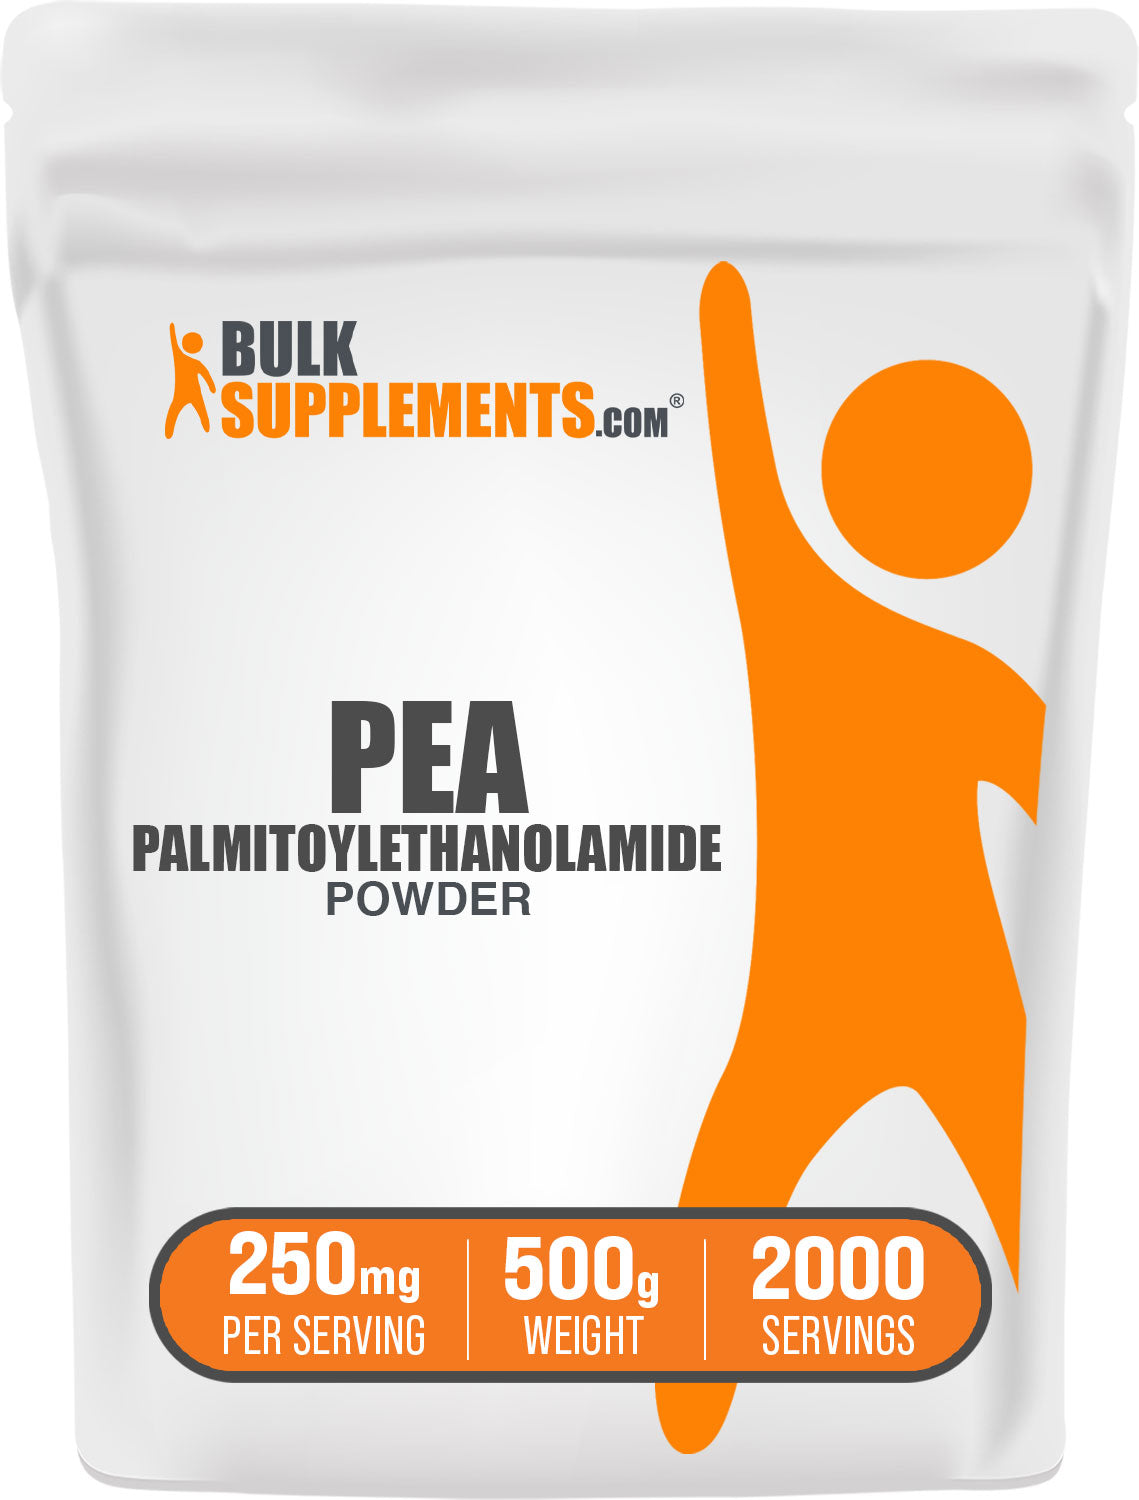 BulkSupplements.com Palmitoylethanolamide (PEA) Powder 500g bag